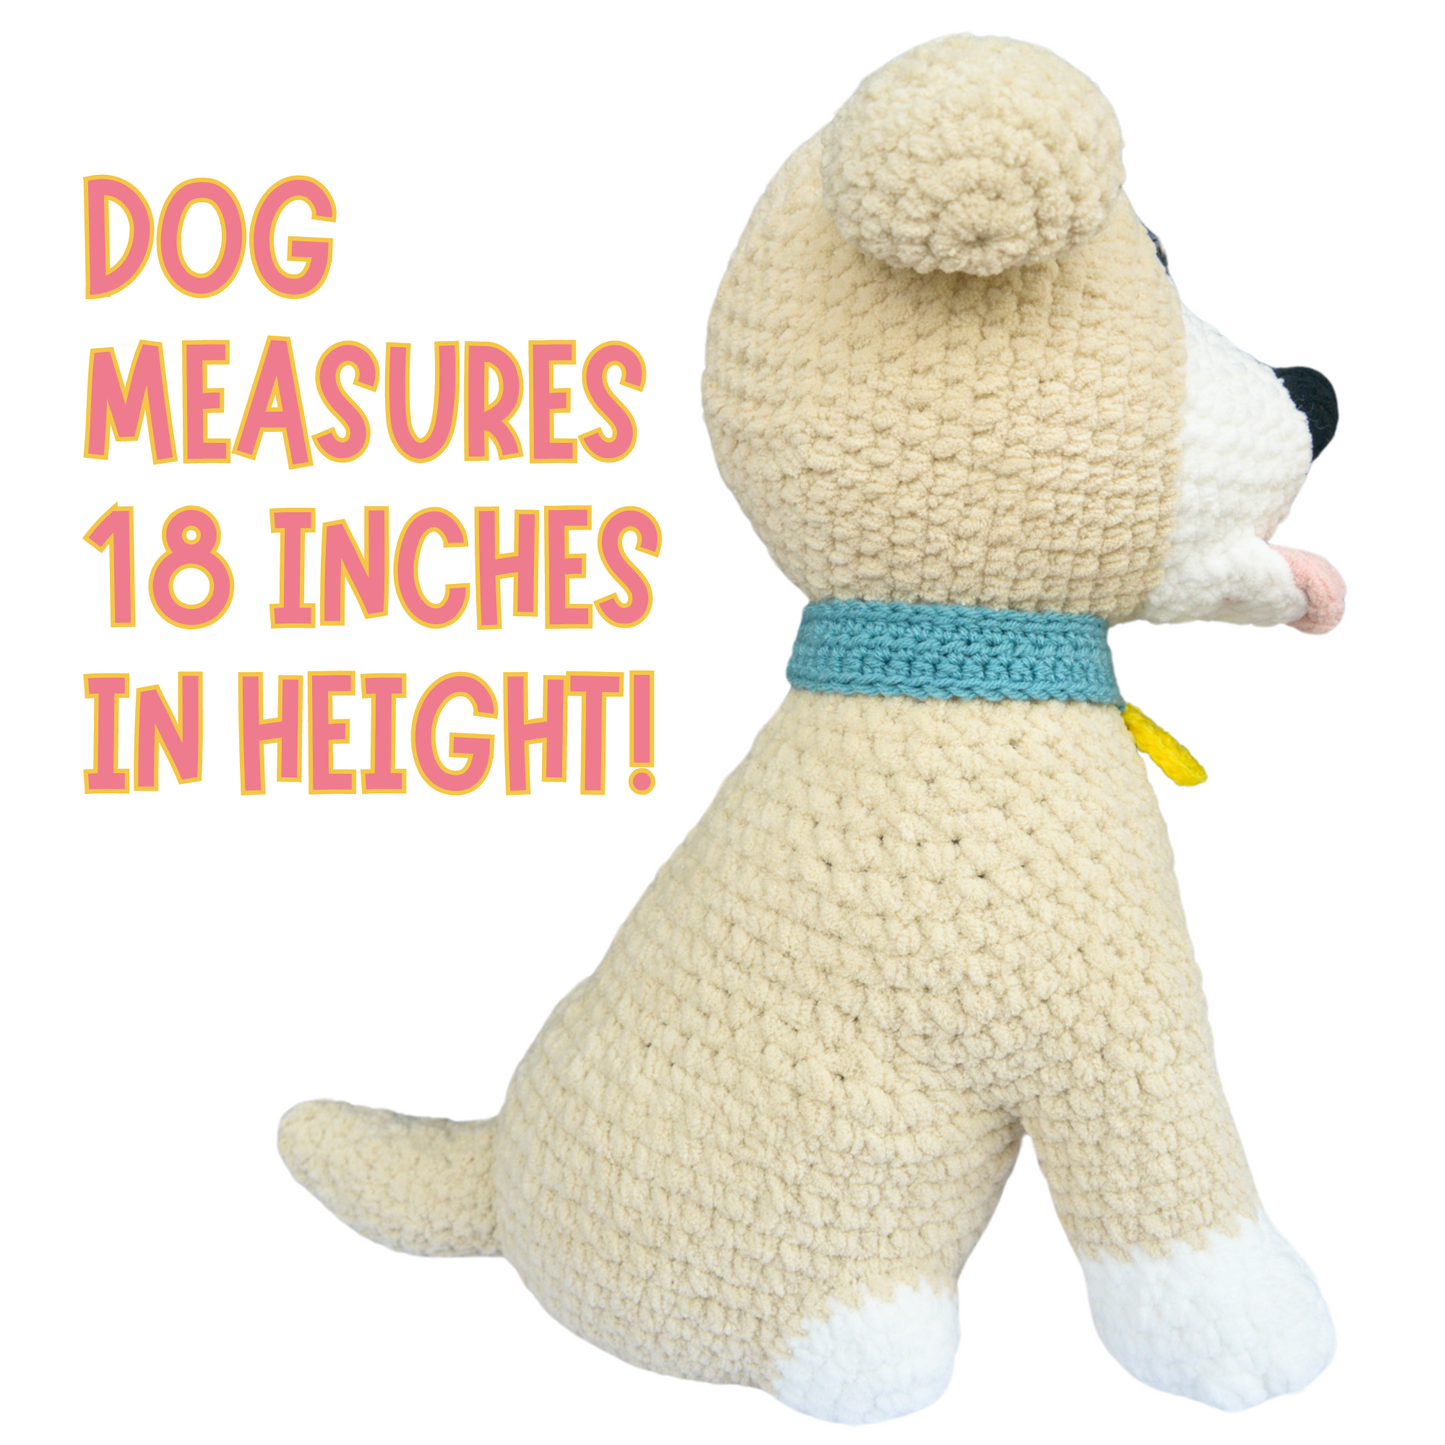 Crochet Dog Pattern PDF Tutorial for Beginners